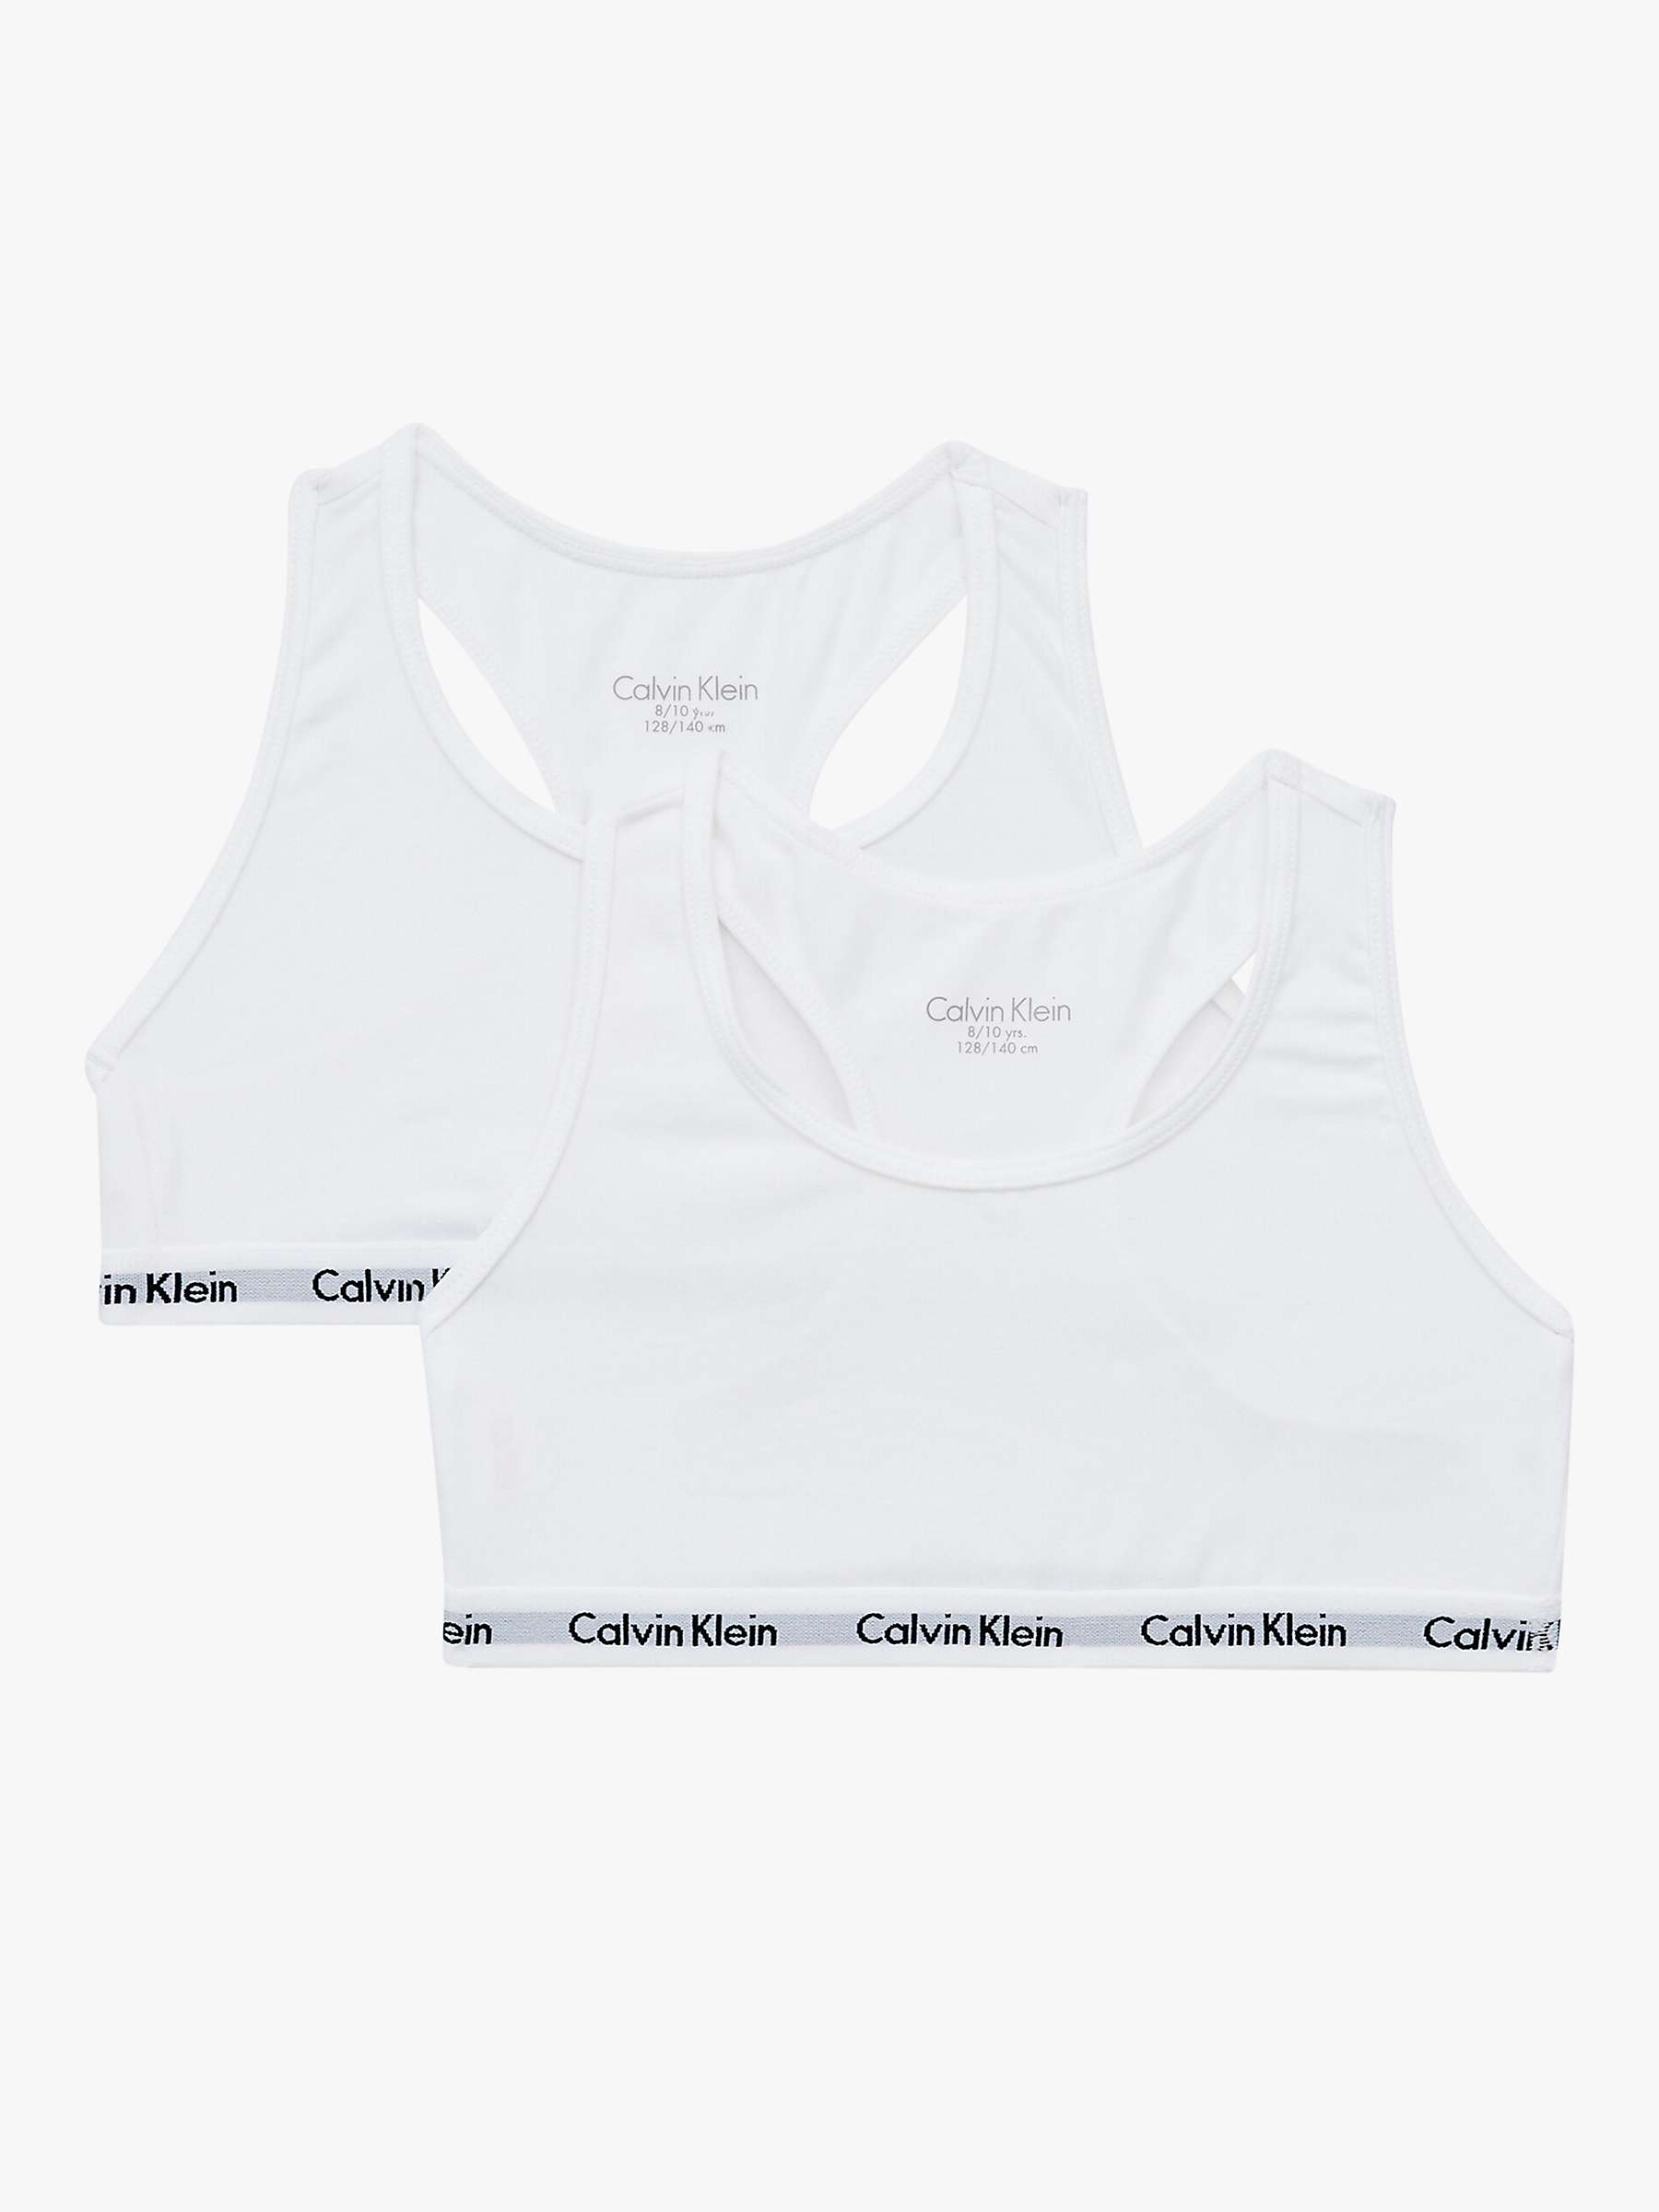 Buy Calvin Klein Kids' Modern Cotton Bralette, Pack of 2, White Online at johnlewis.com